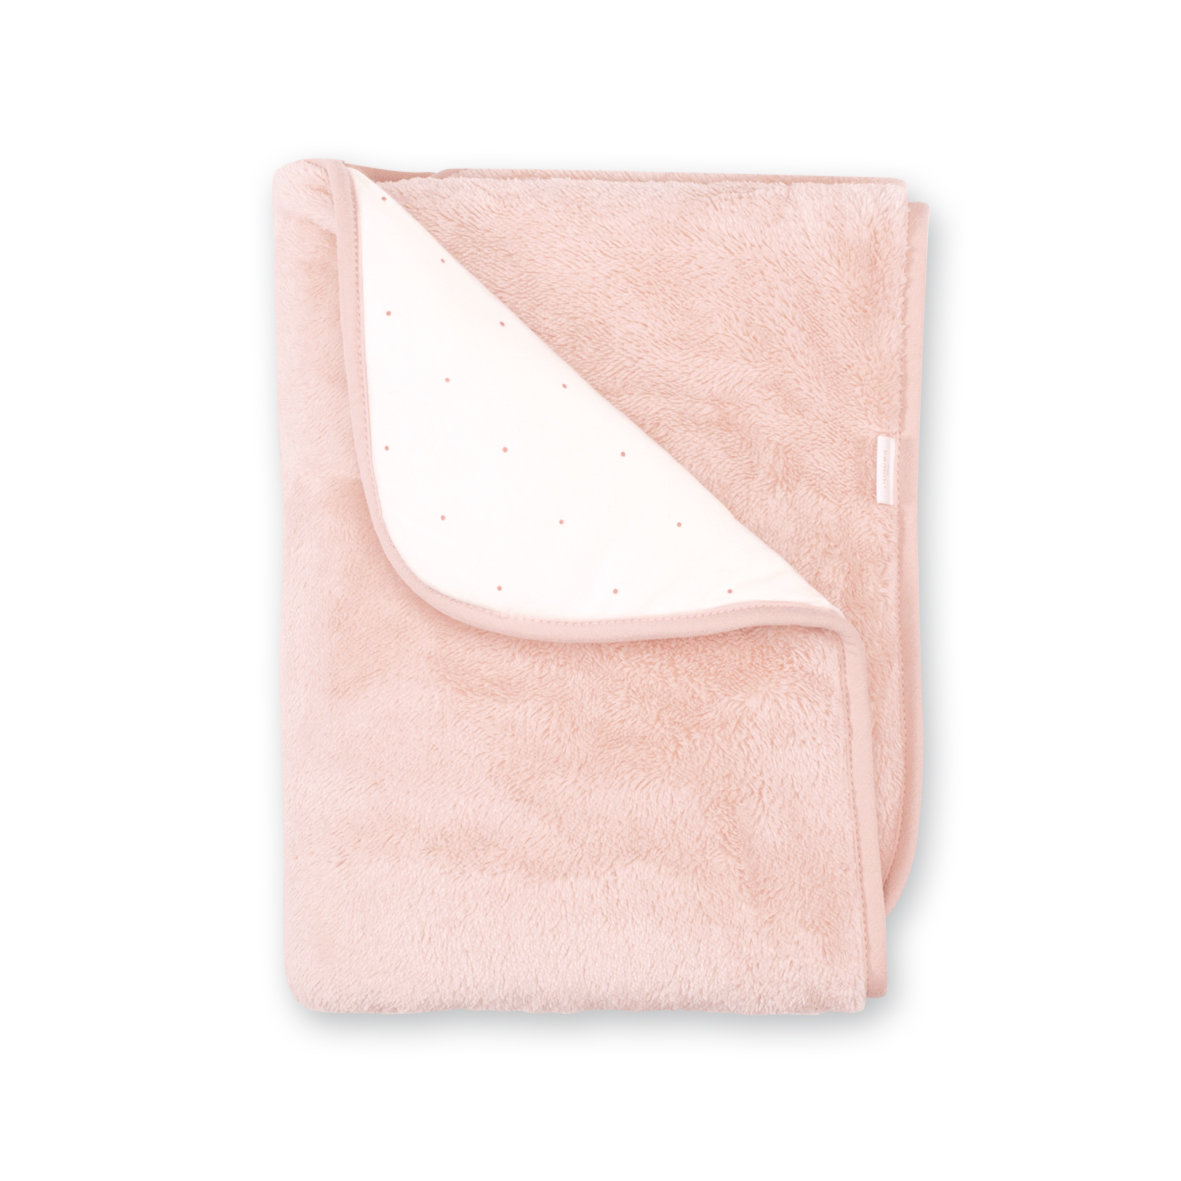 Blanket Pady jersey + softy 75x100cm CHOUX Old pink tog 3